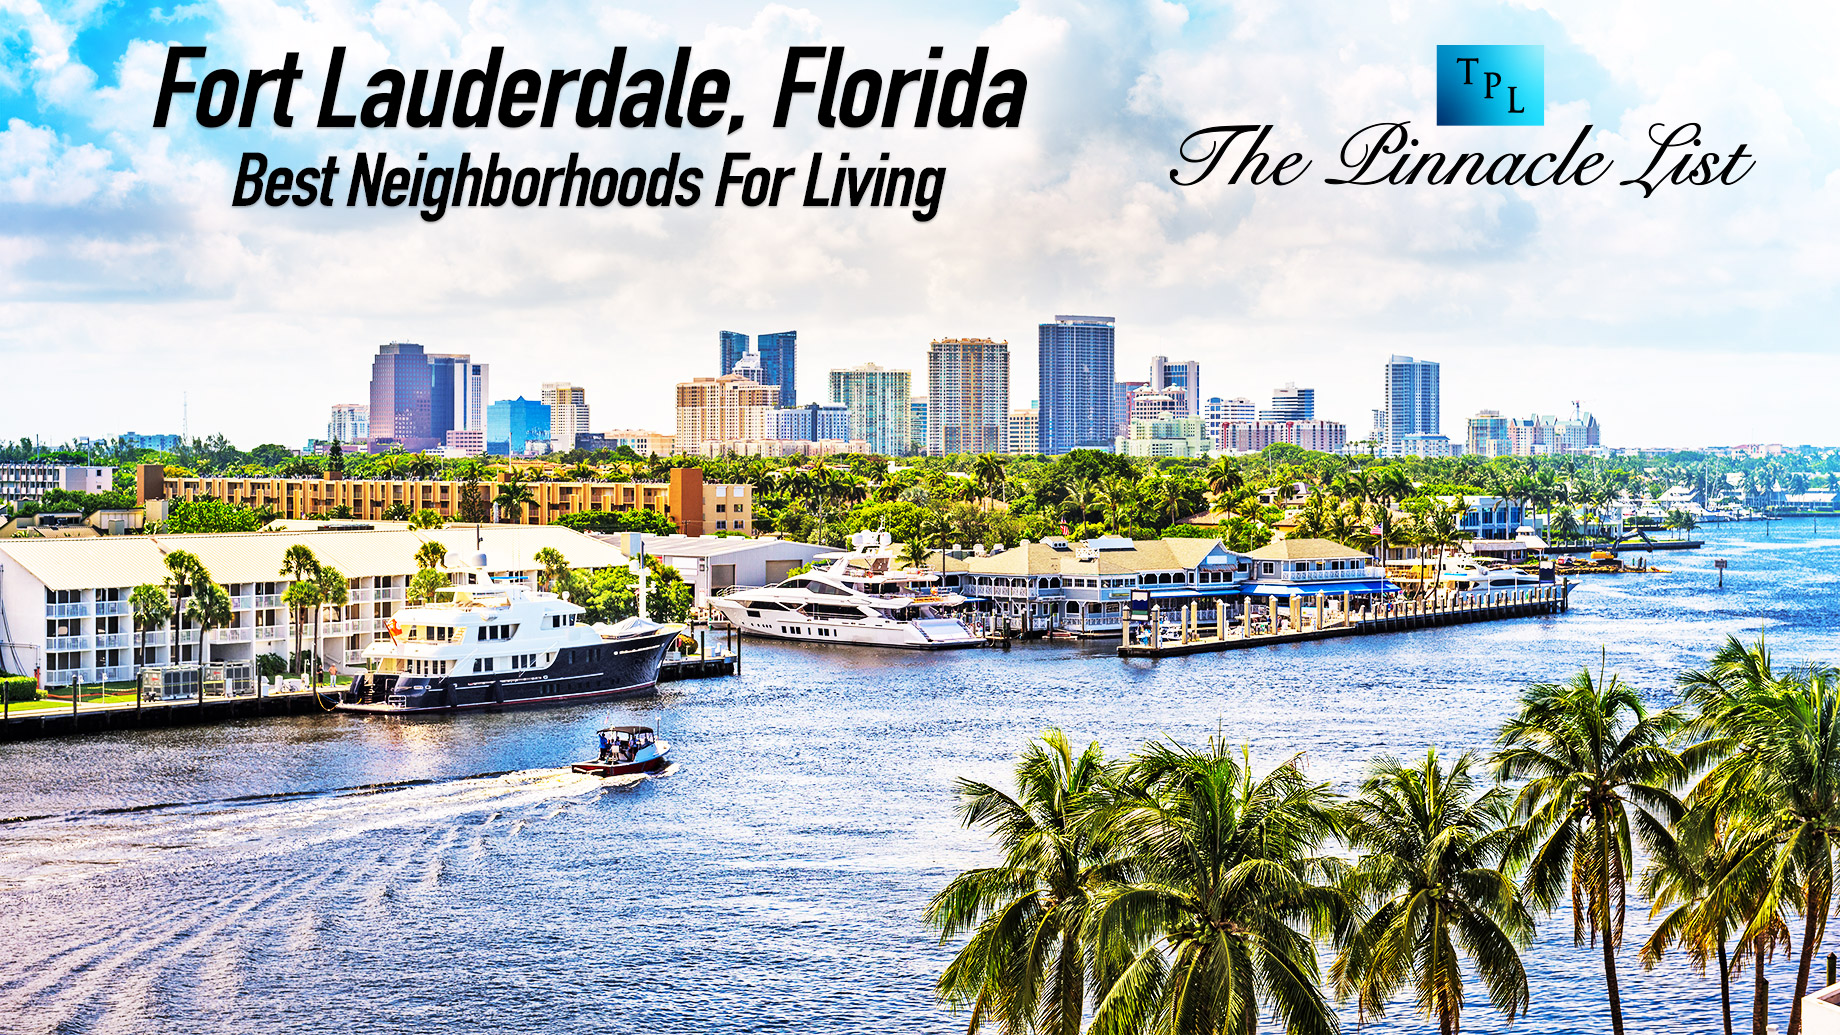 Fort Lauderdale, Florida: Best Neighborhoods For Living